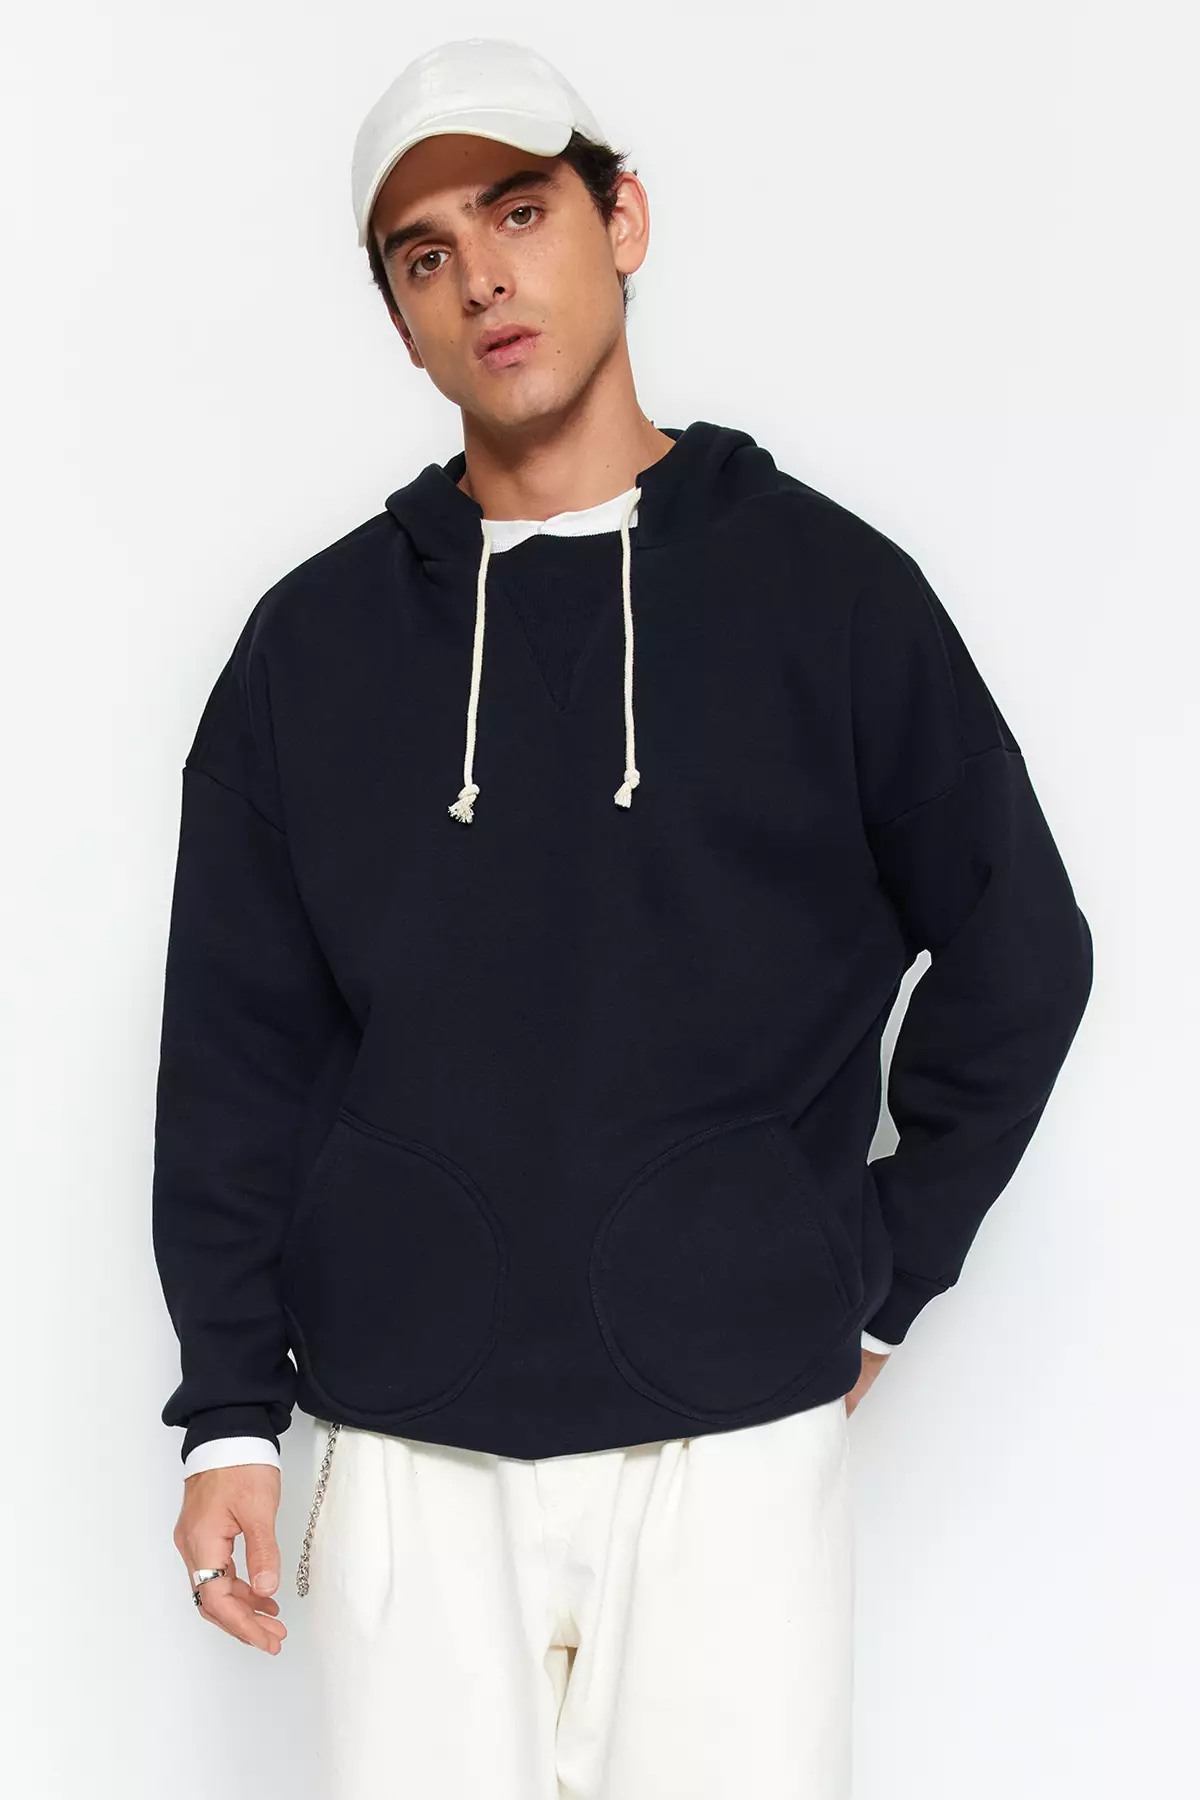 Men's Hoodies & Sweatshirts - Up to 90% Off | ZALORA